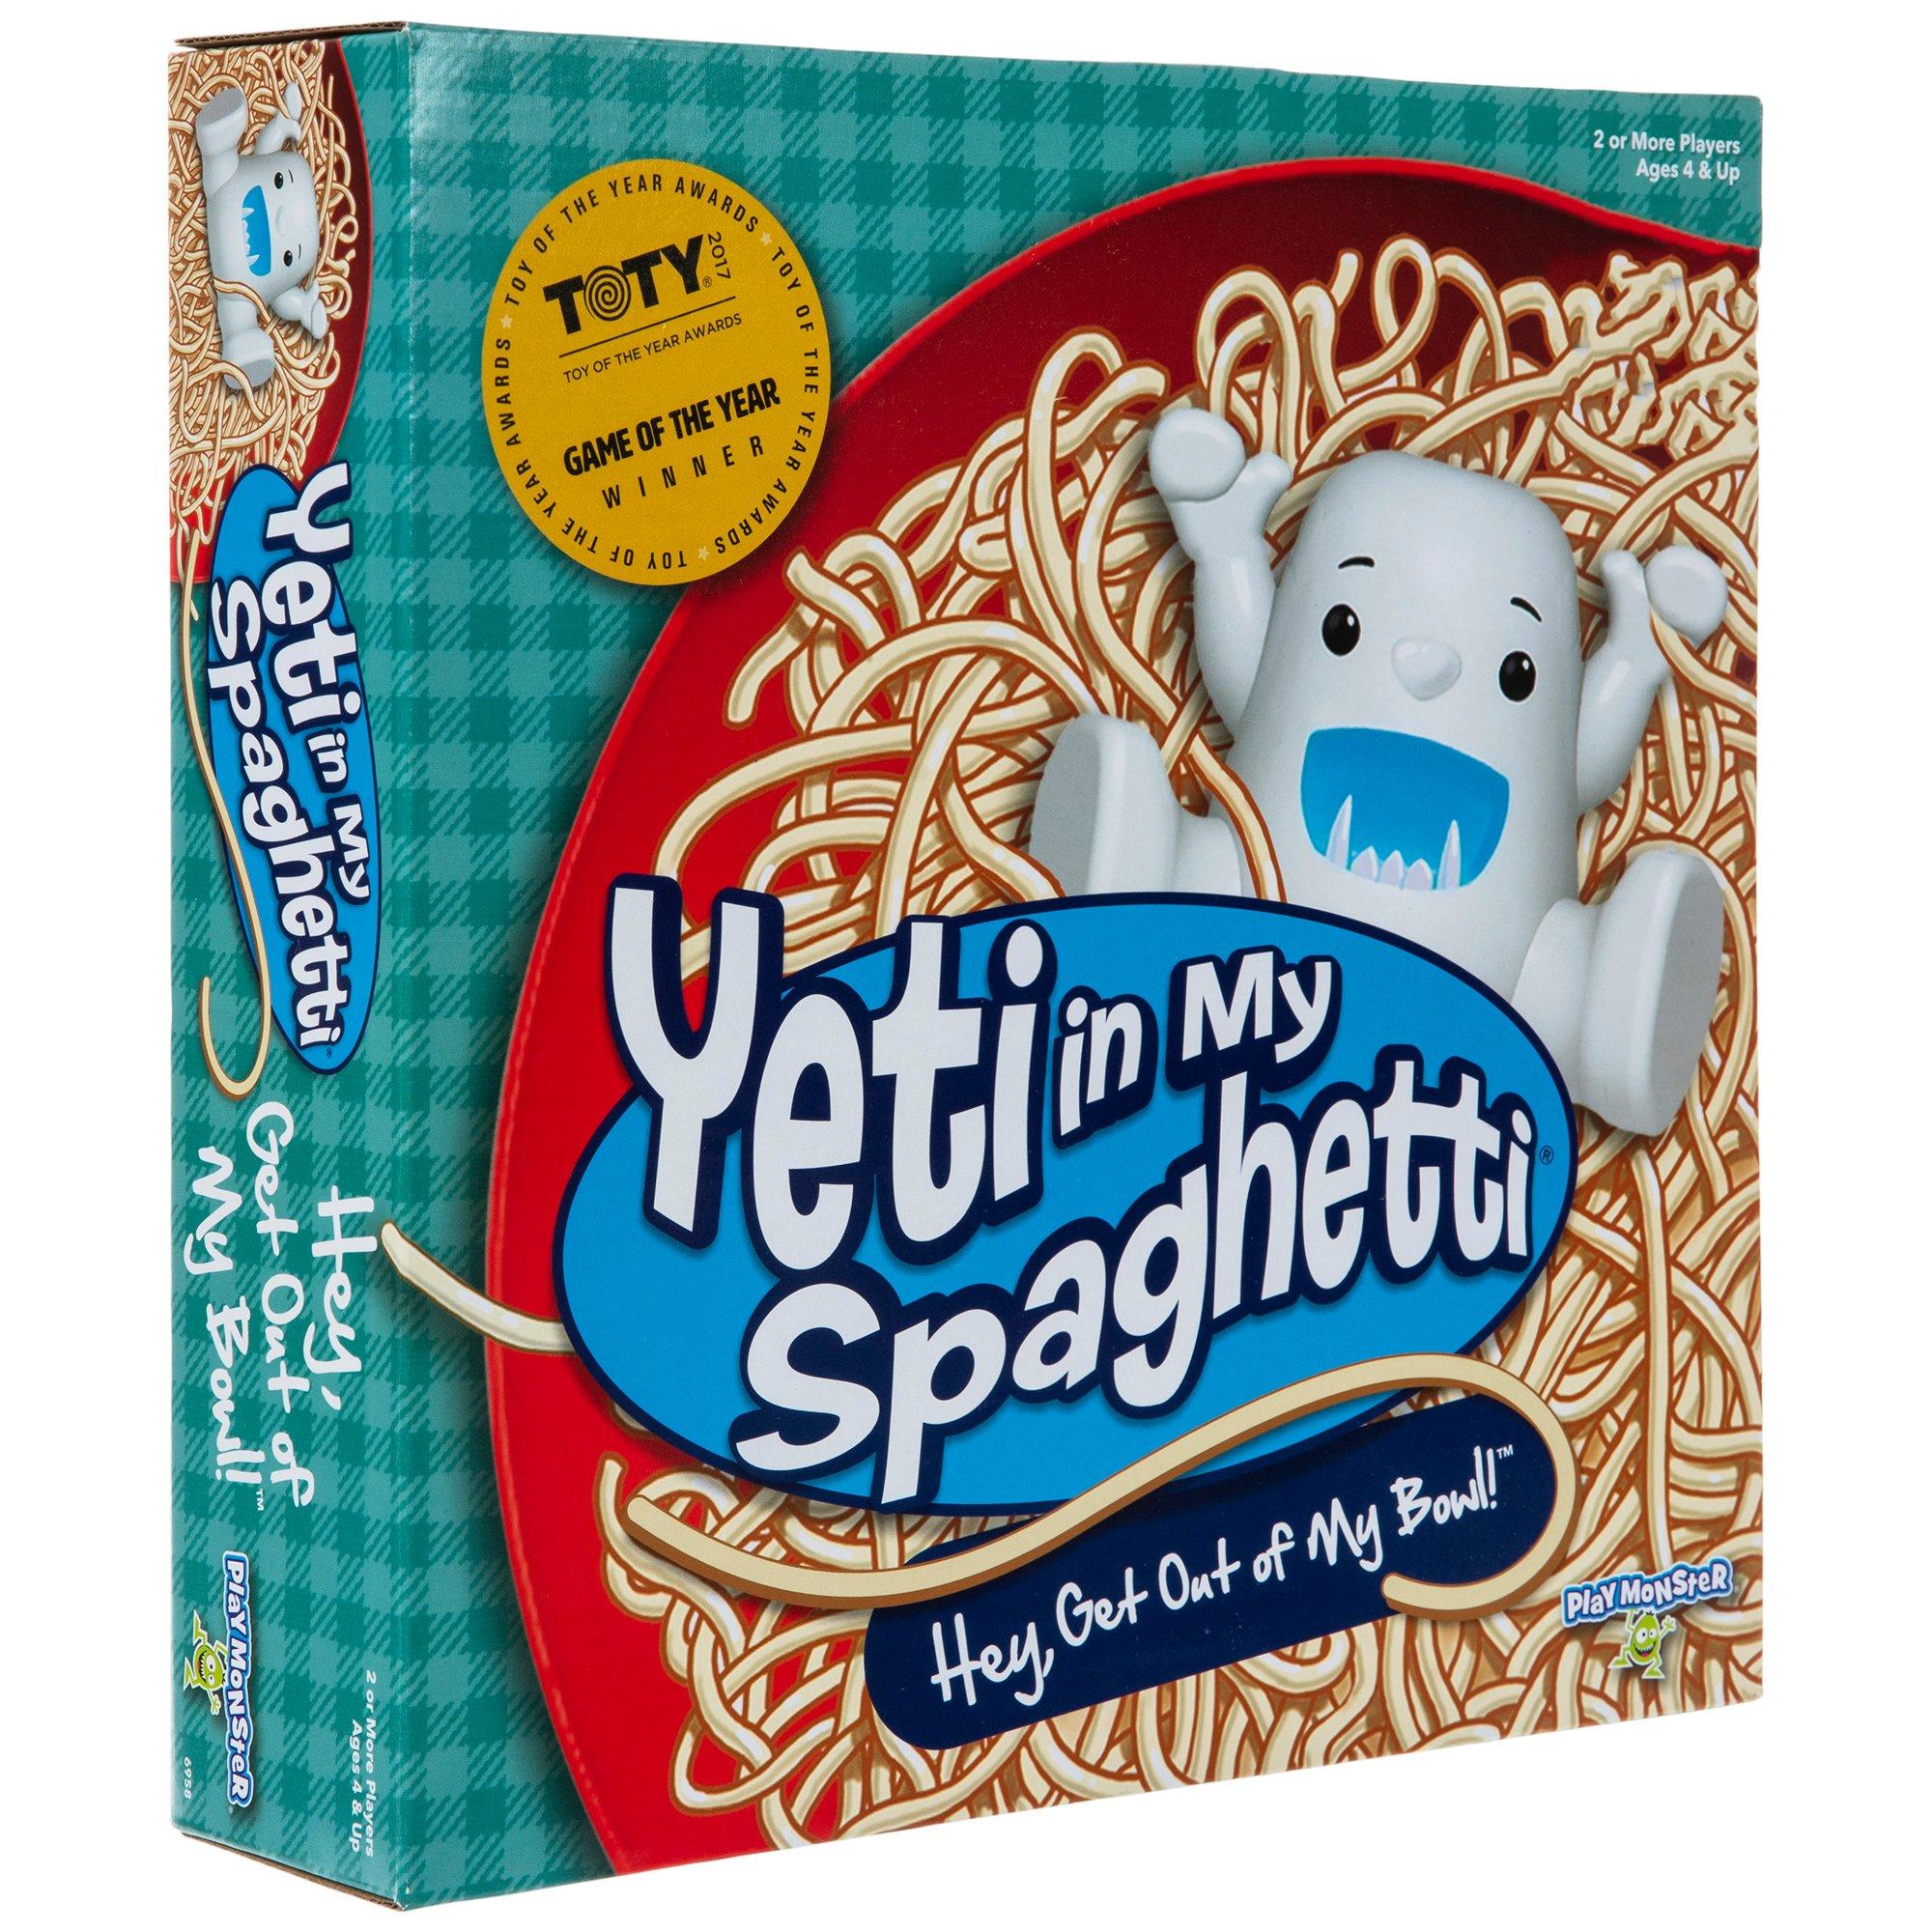 Yeti In My Spaghetti, Hobby Lobby